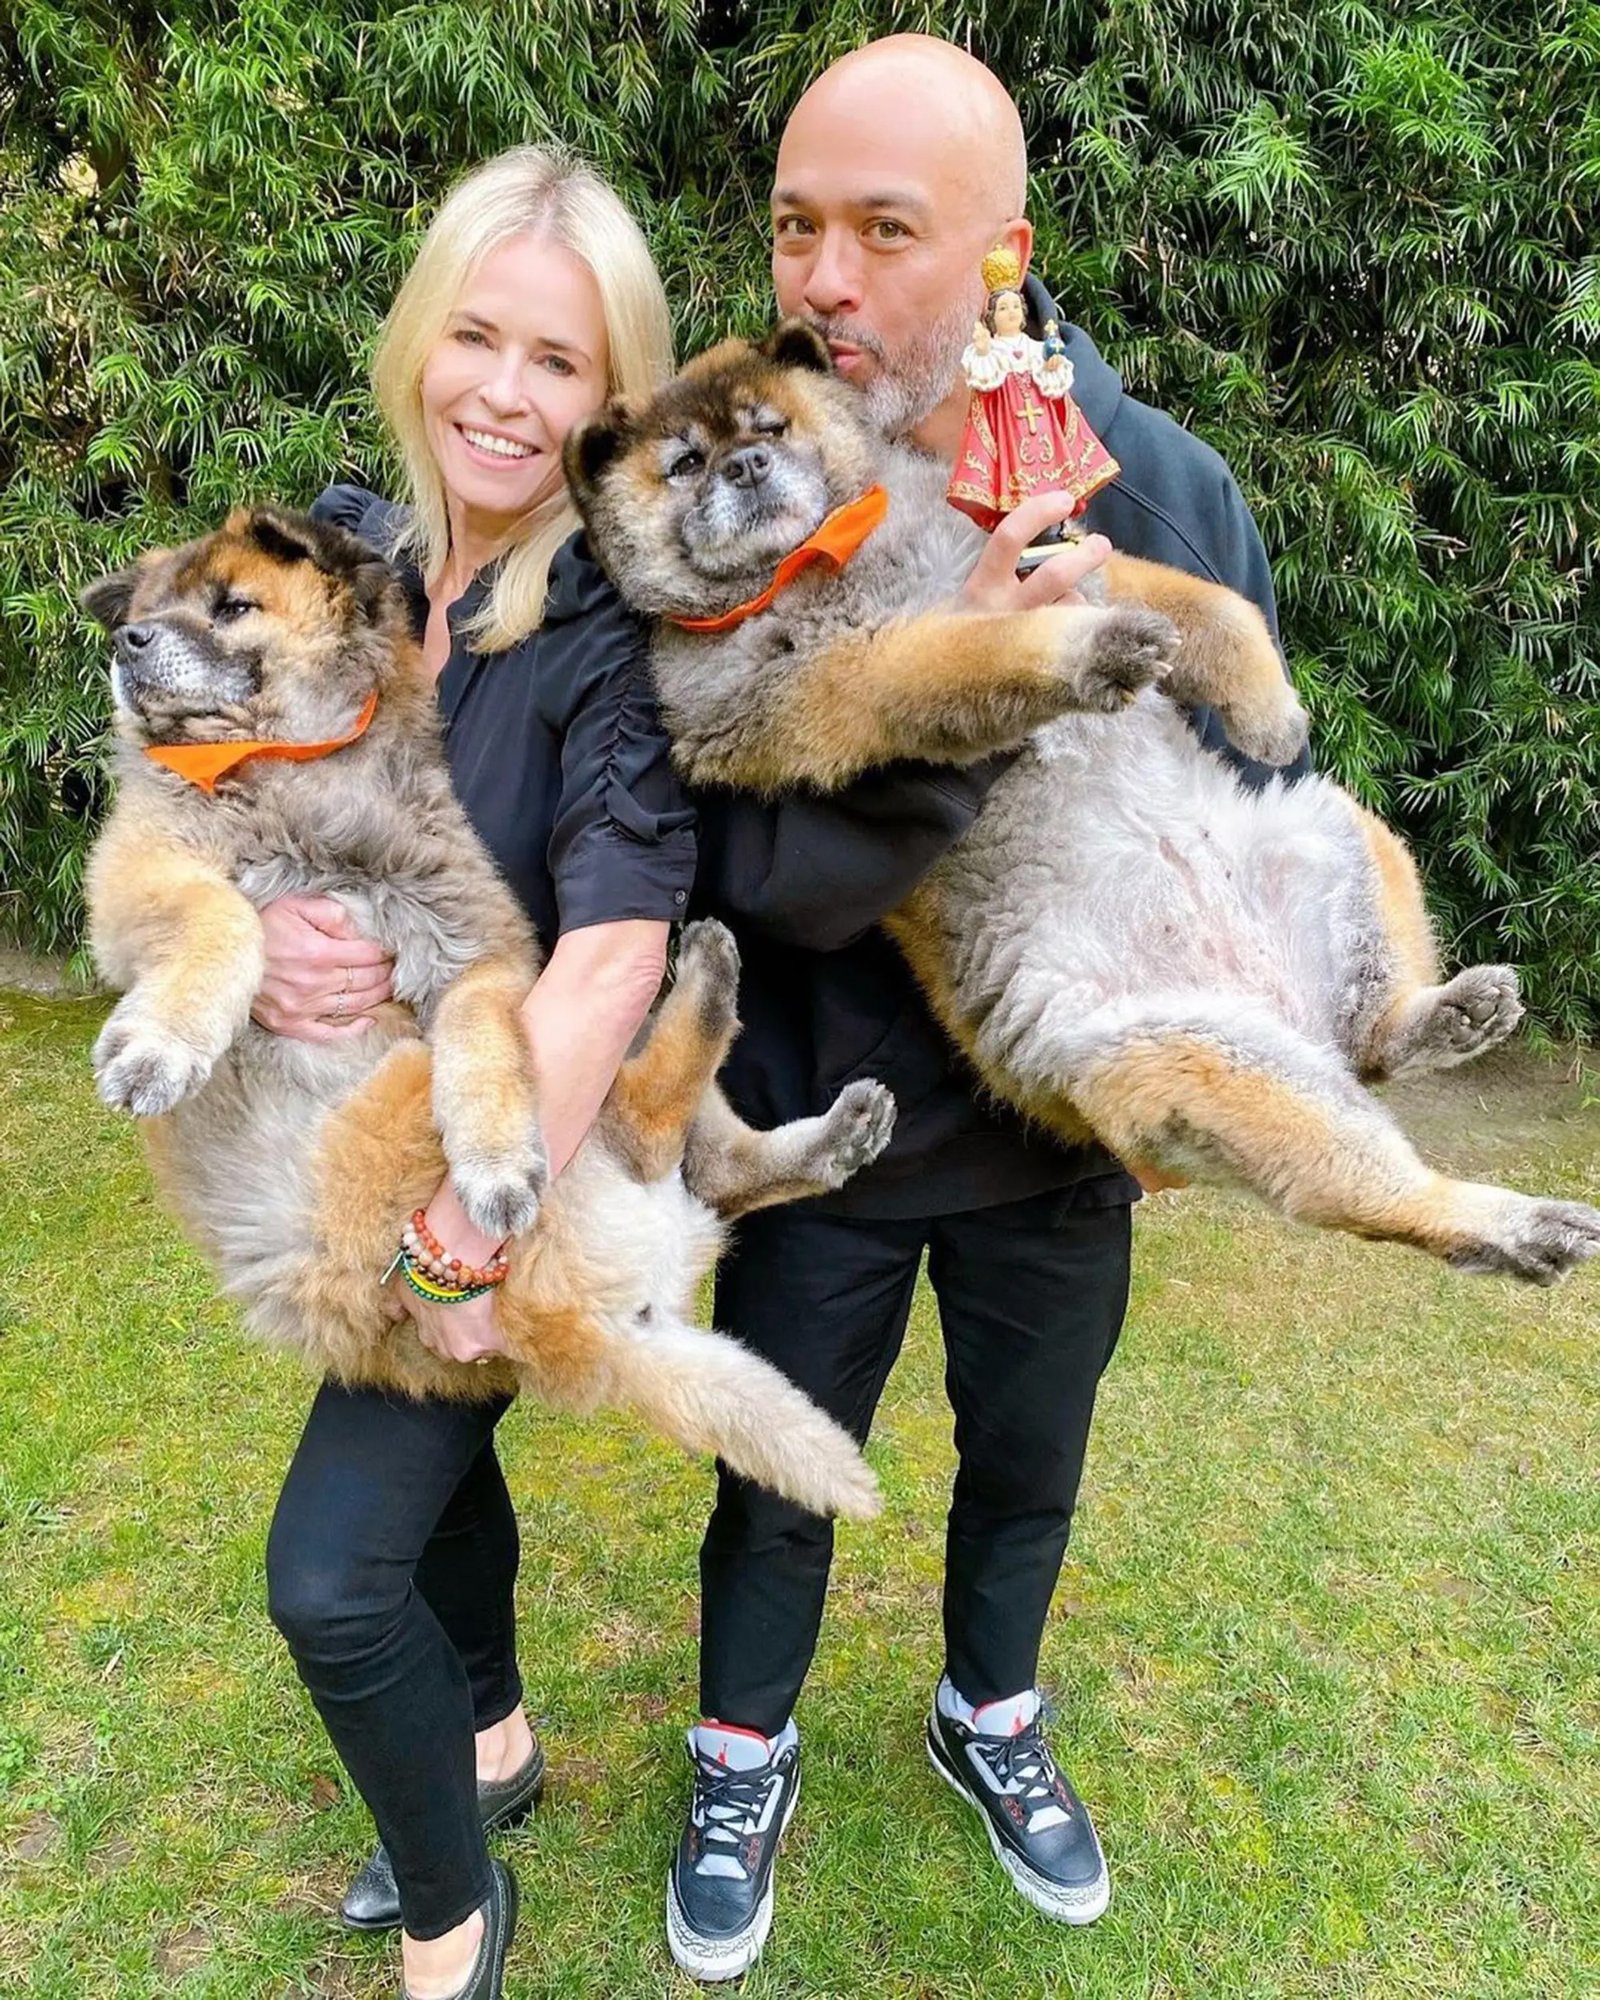 Jo Koy and Chelsea Handler holding dogs.